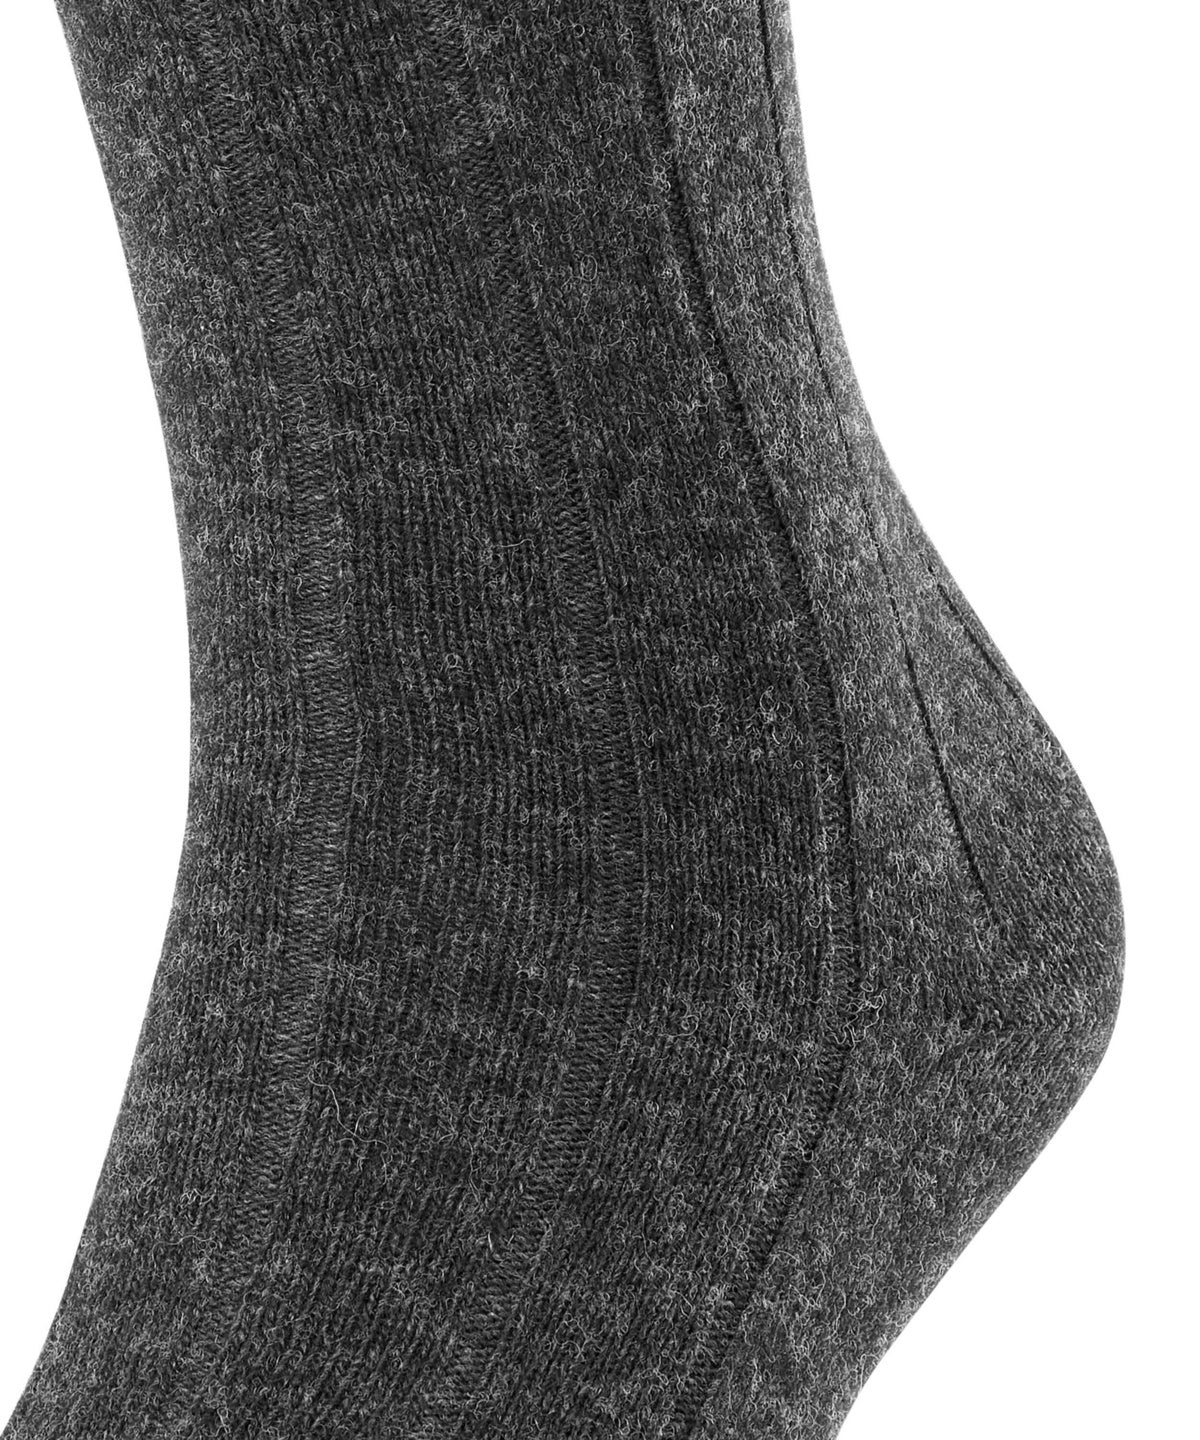 Falke Lhasa Cashmere Rib Socks, Anthracite